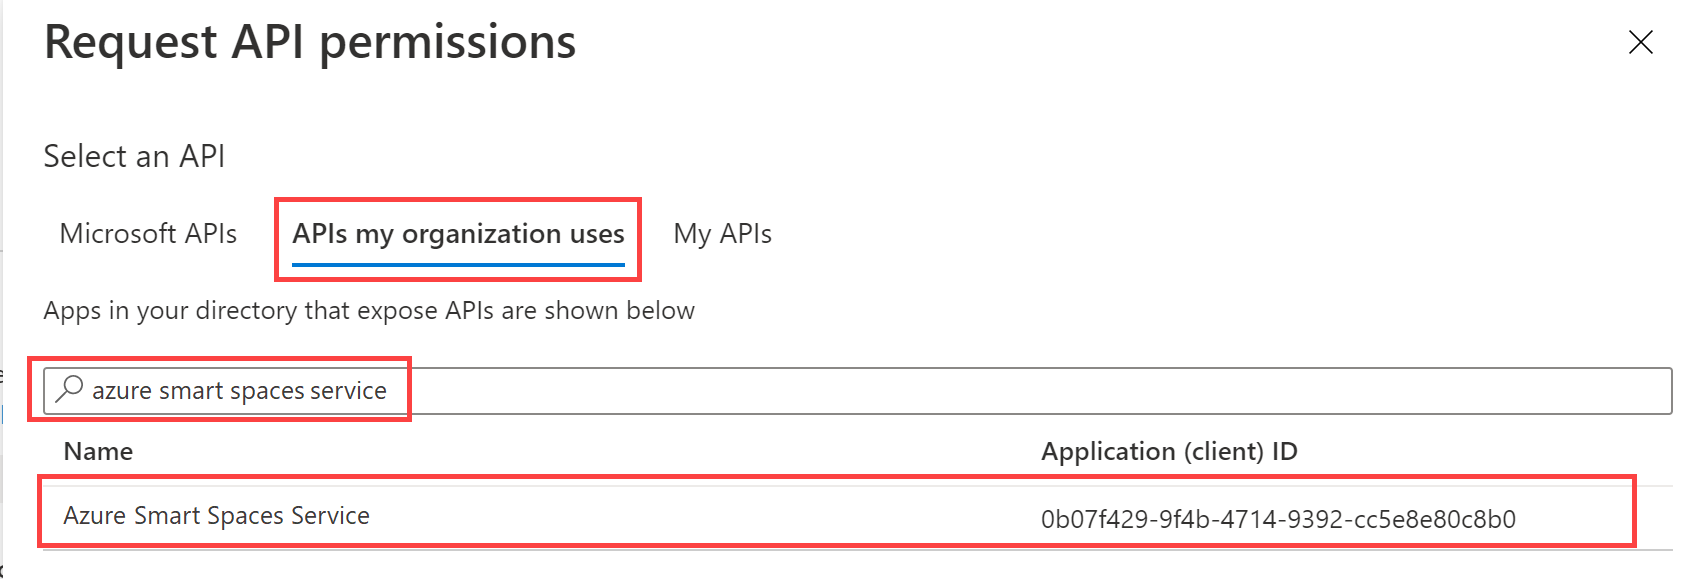 Azure portal での Azure Smart Spaces Service が表示された [API アクセス許可の要求] ページの検索結果のスクリーンショット。